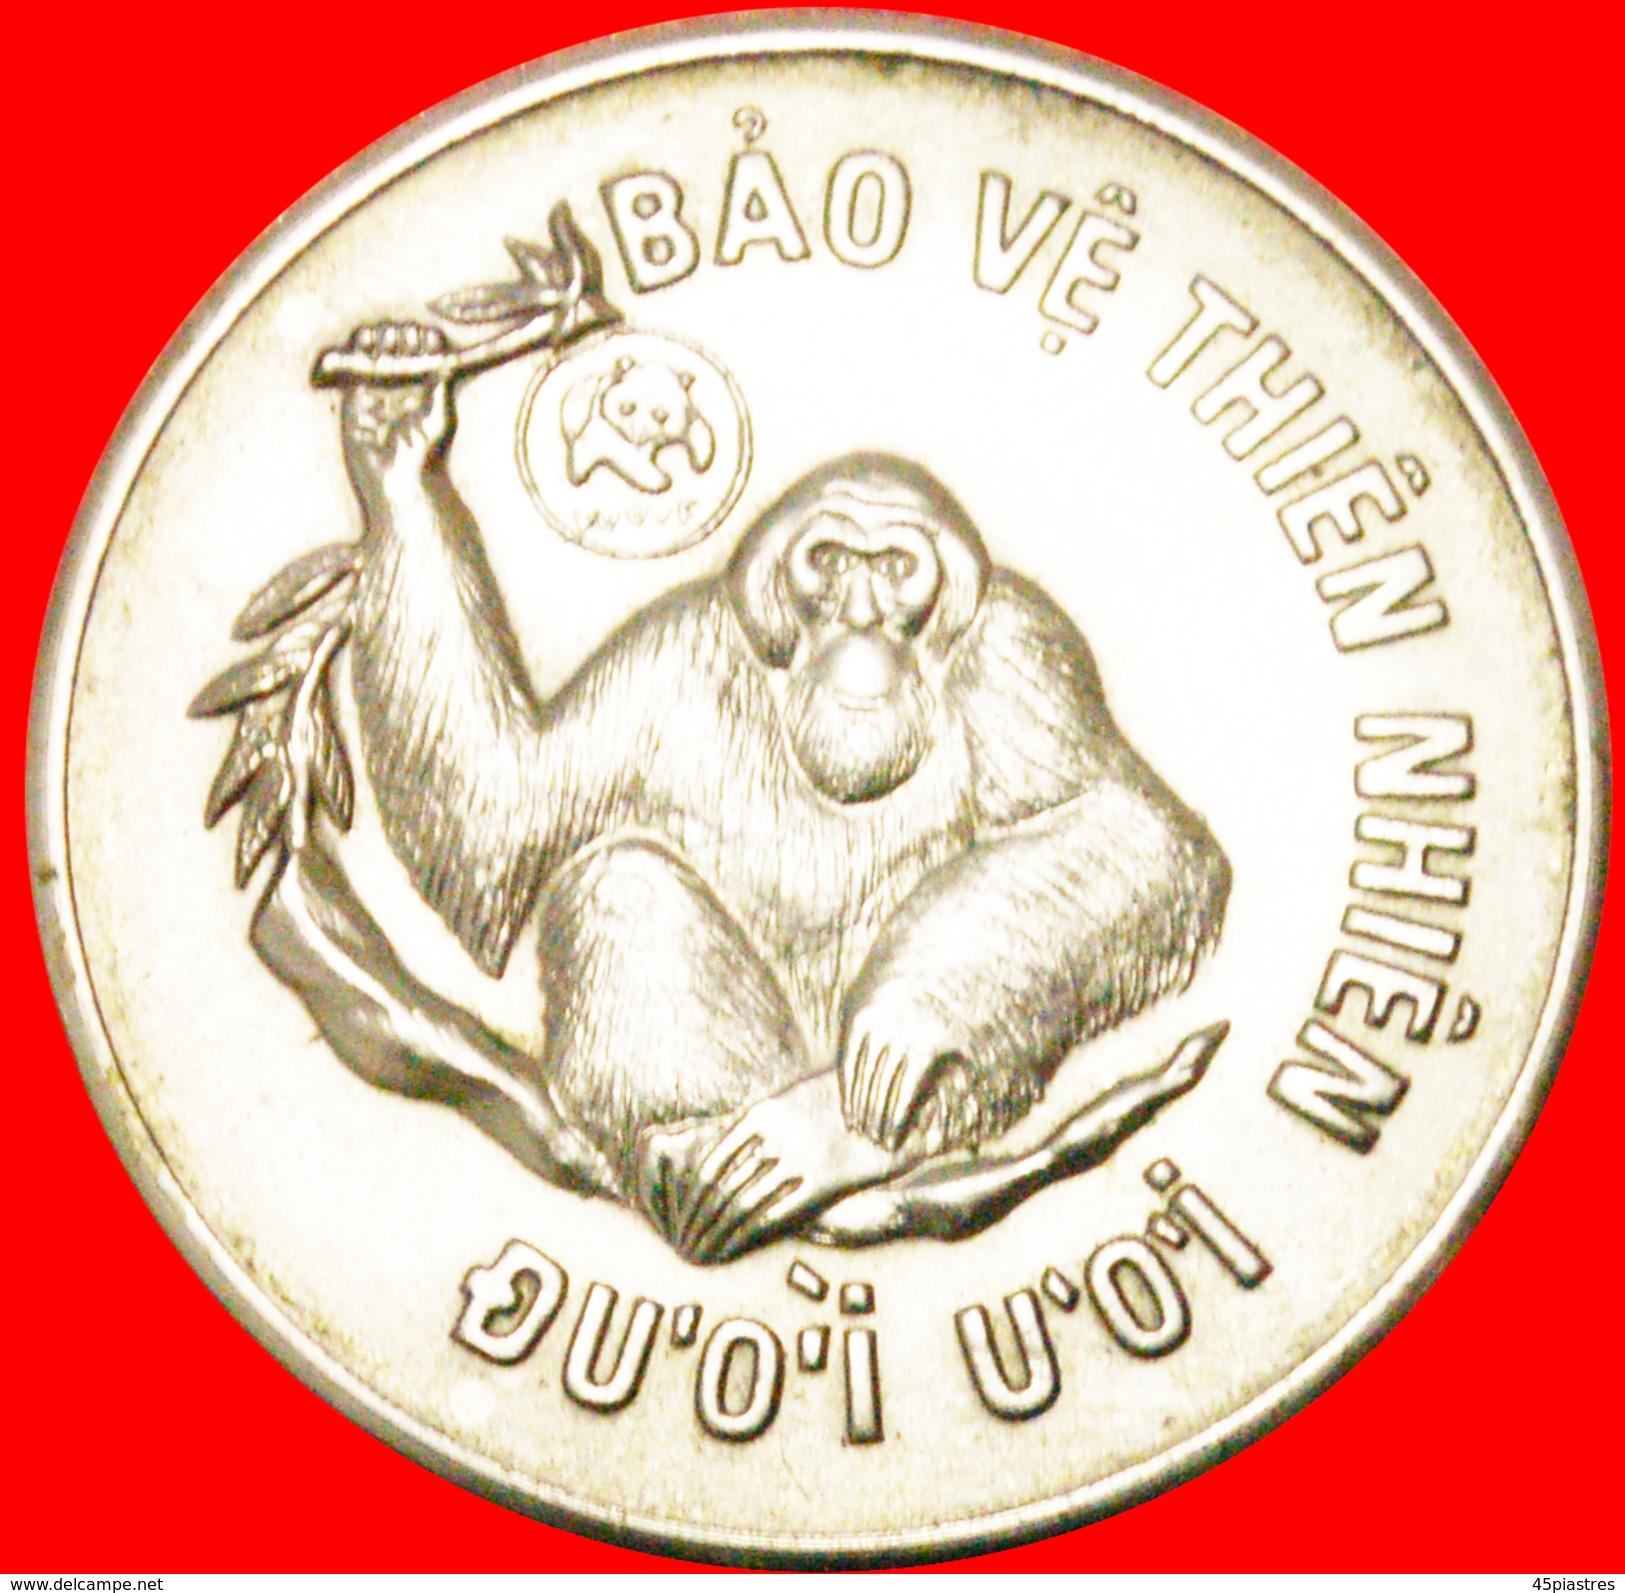 § ORANGUTAN: VIETNAM &#x2605; 10 DONG 1997! LOW START&#x2605; NO RESERVE! - Viêt-Nam